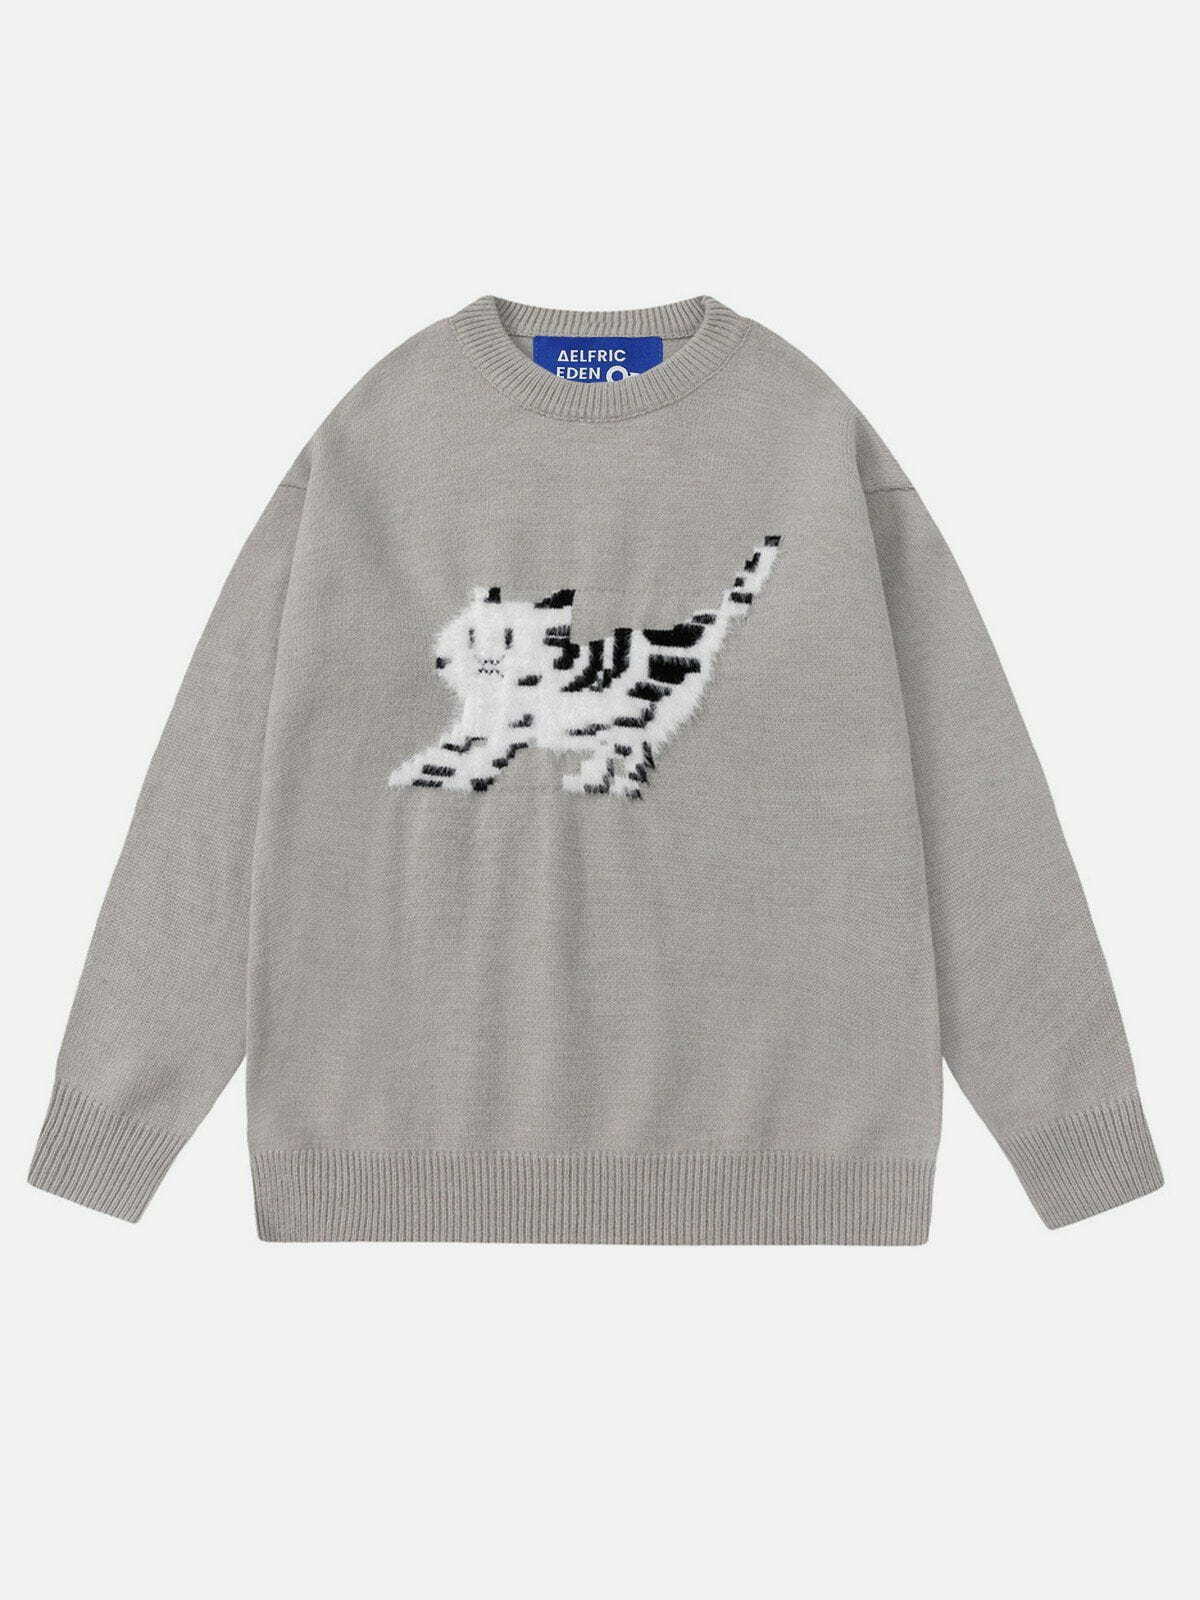 chic cat flocking sweater   youthful & trendy design 3461